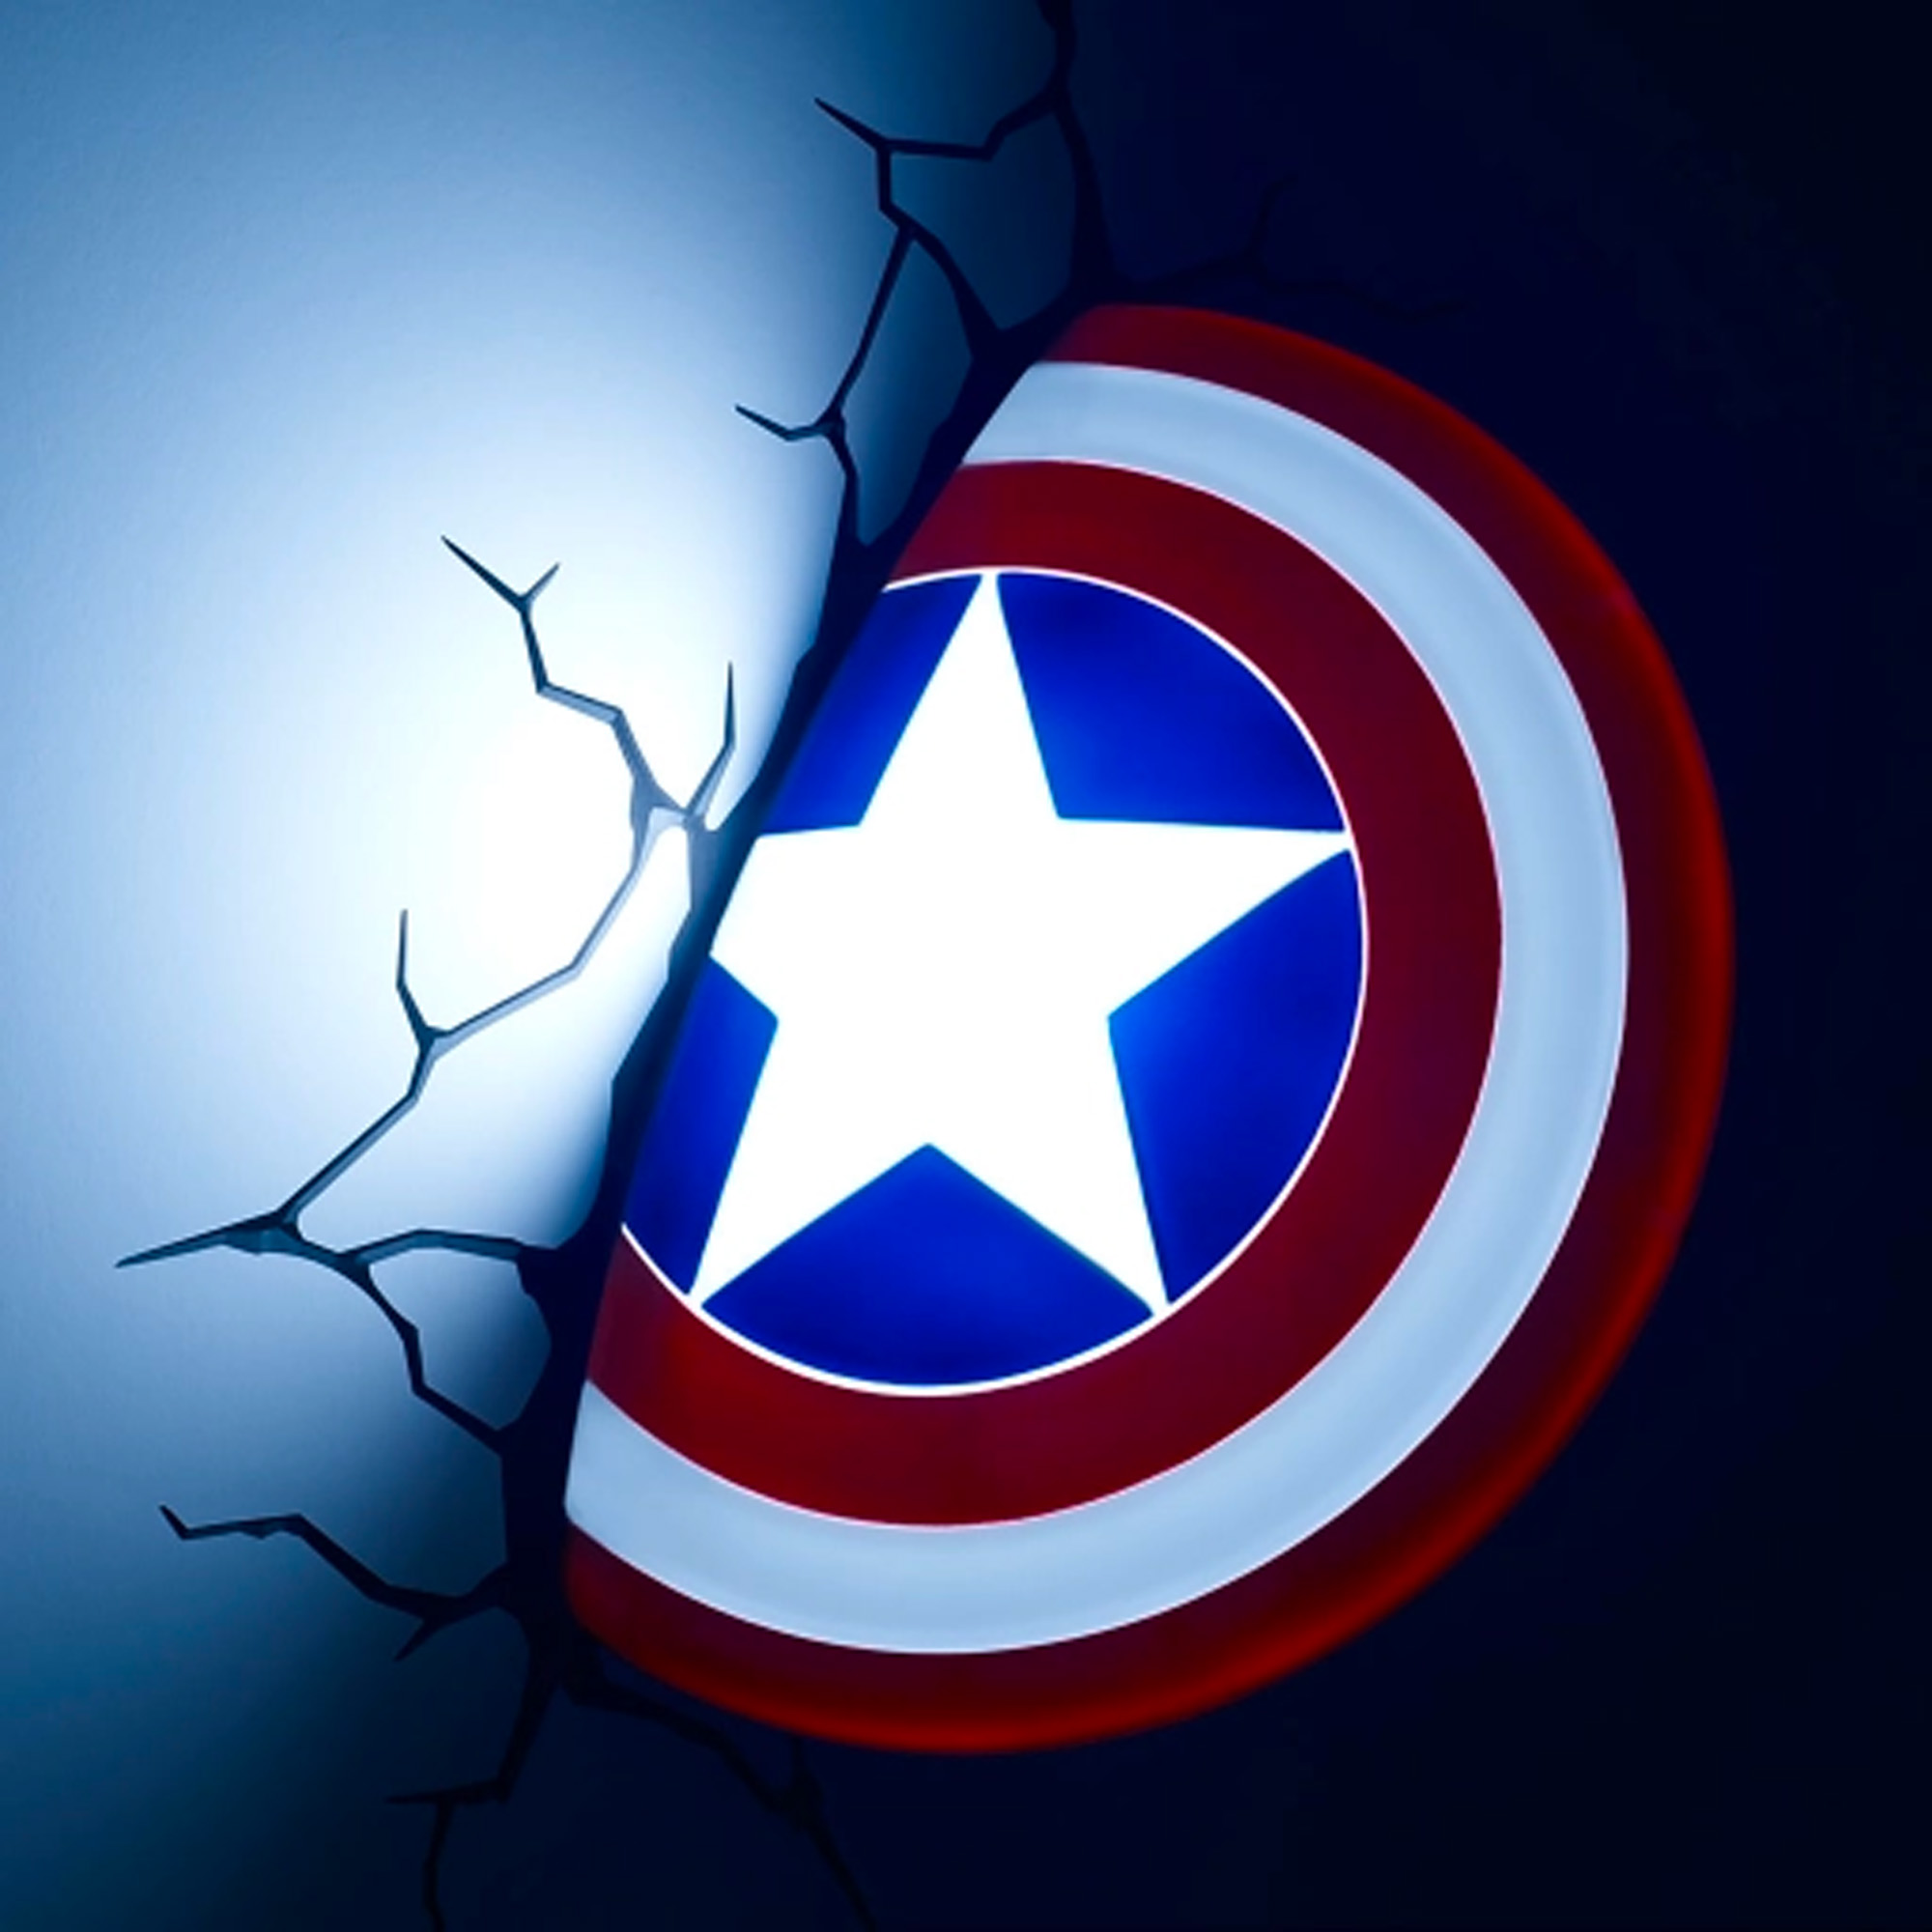 Captain America Schild 3D Wandleuchte - Marvel